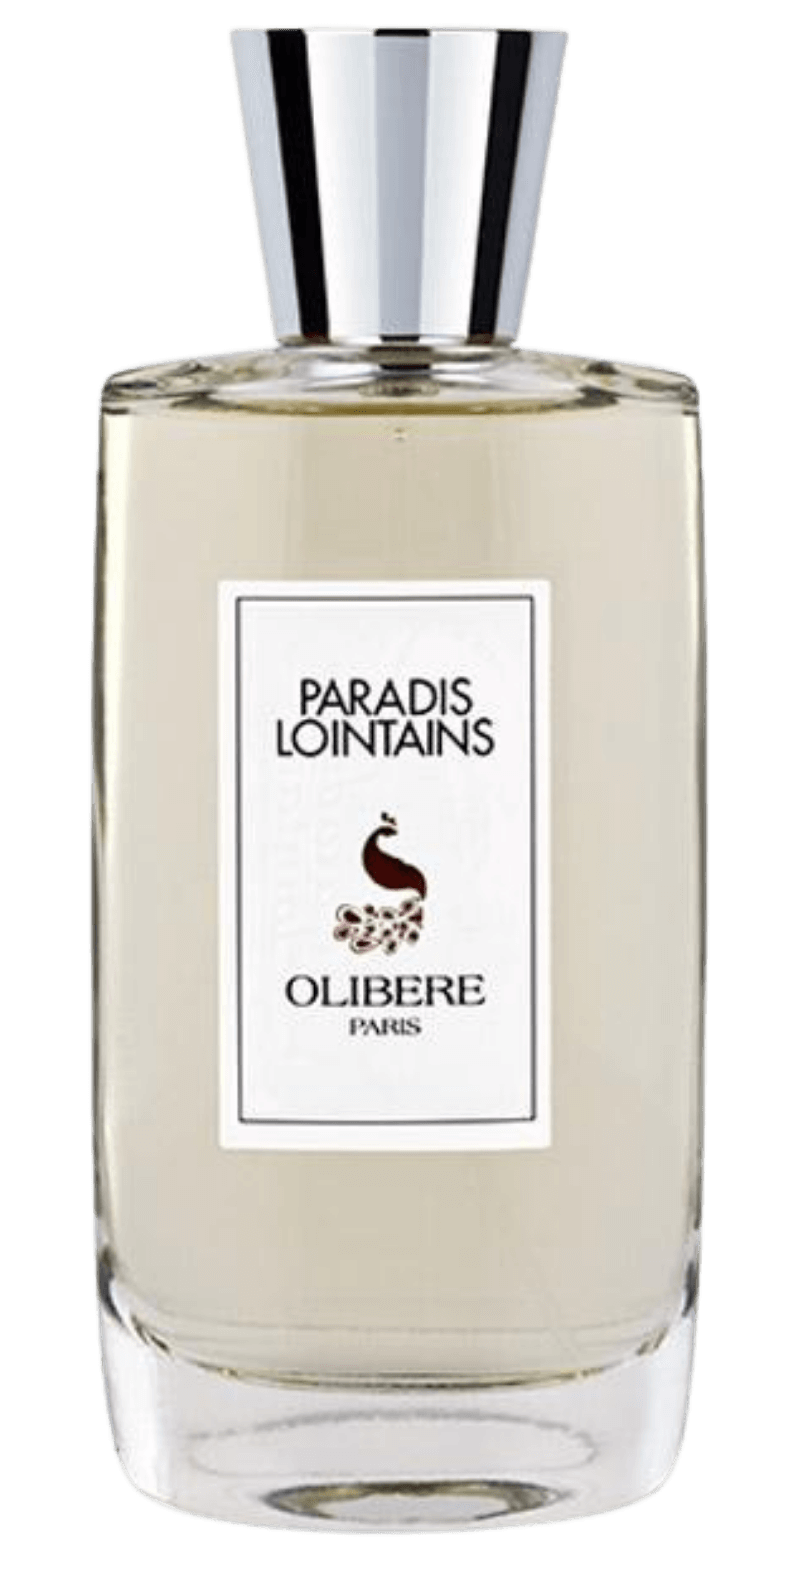 's Olibere Paradis Lointains - Bellini's Skin and Parfumerie 